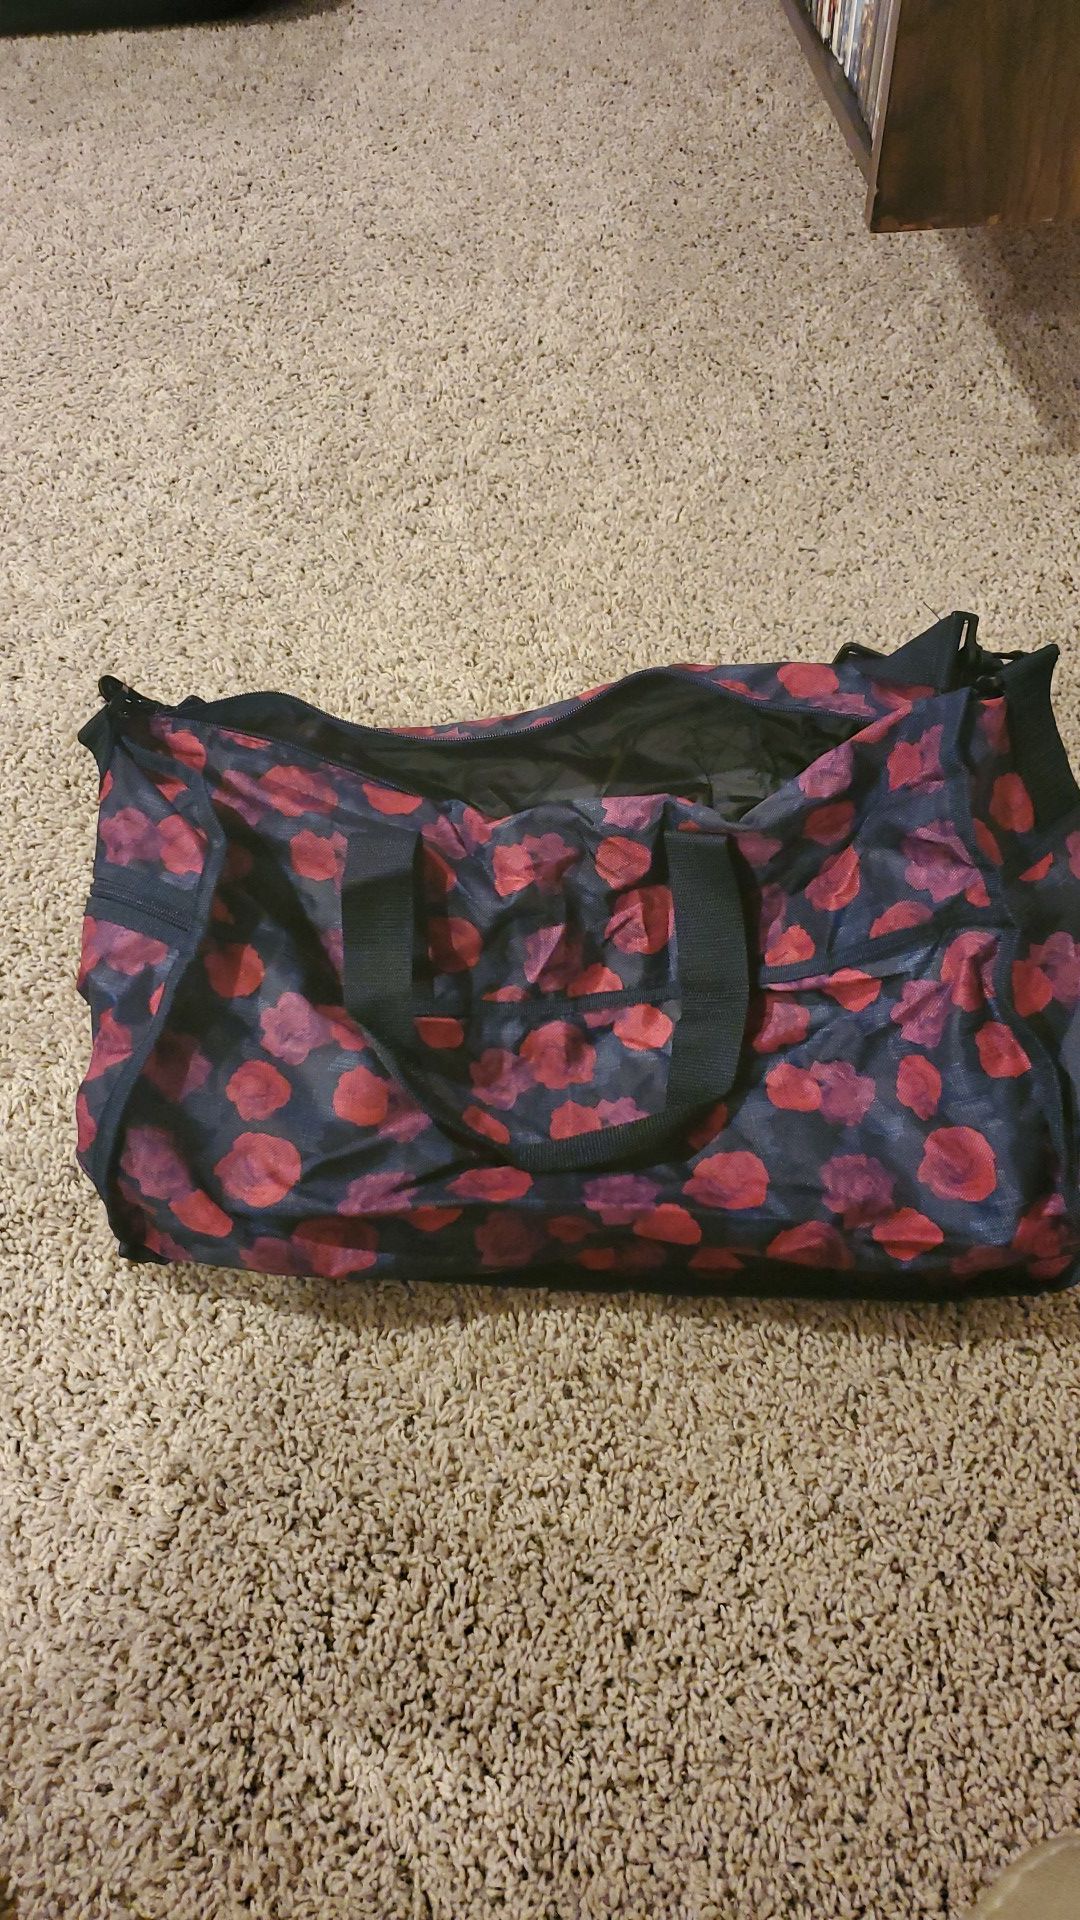 Rolling duffel bag